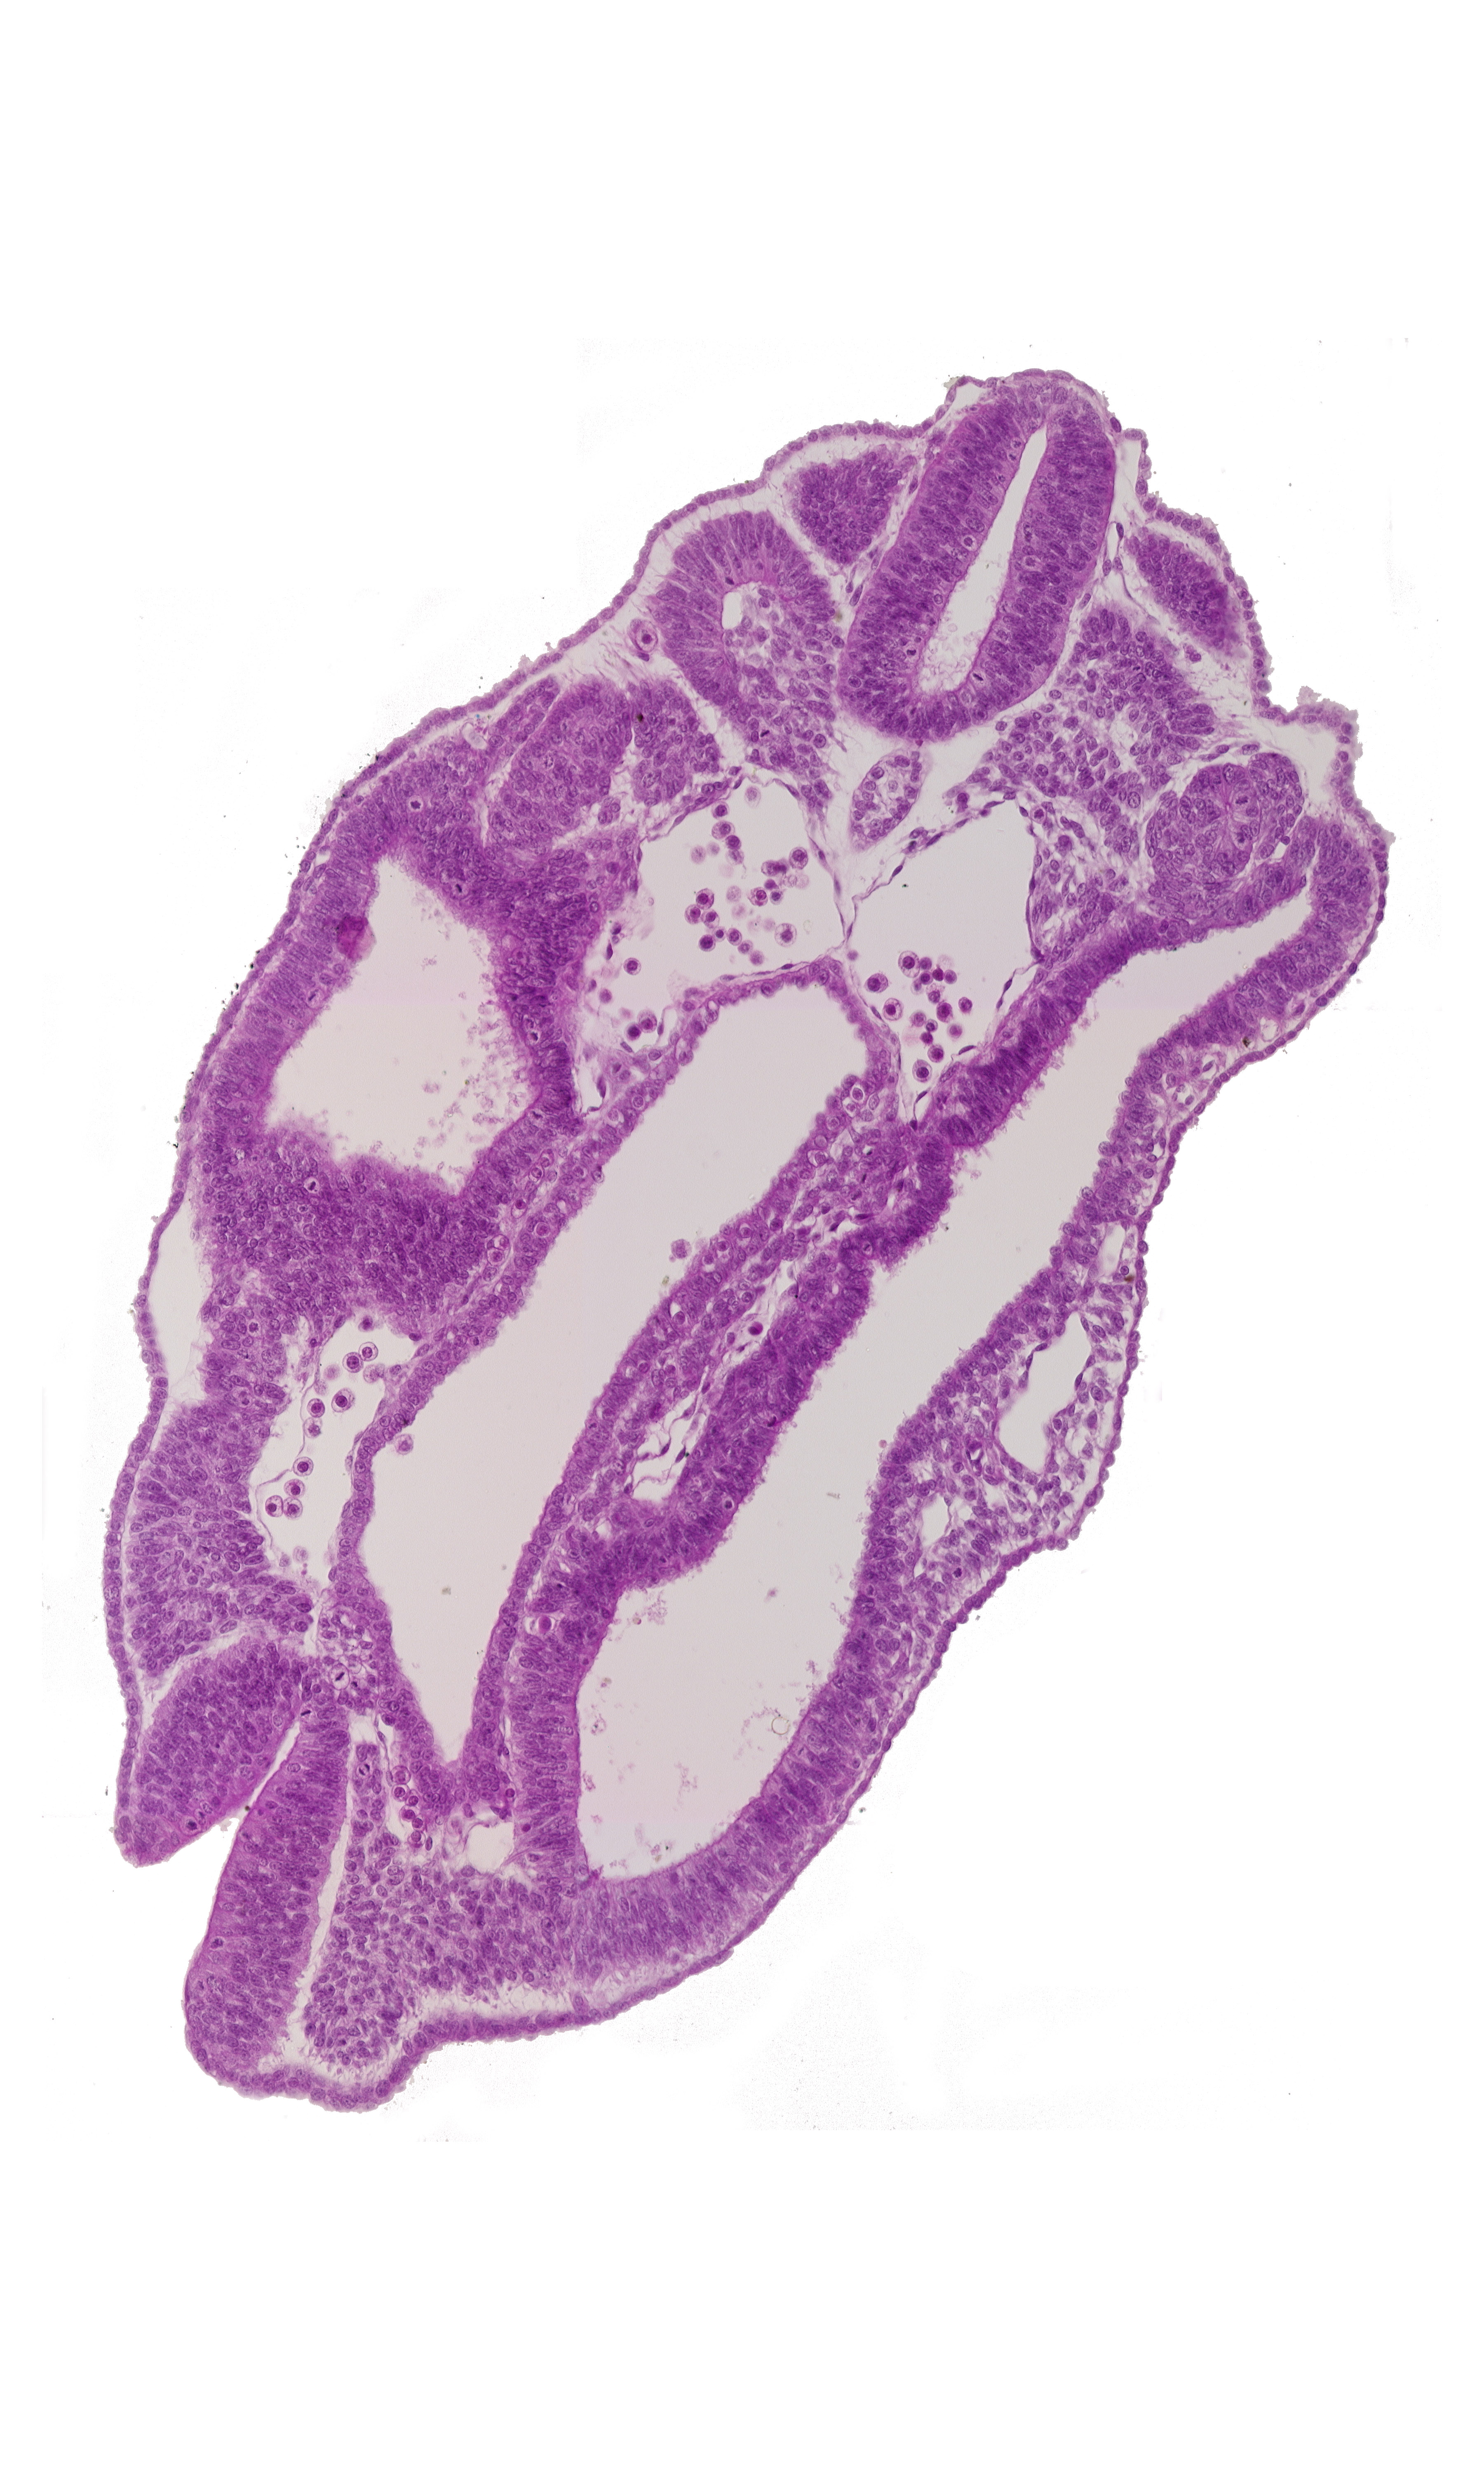 dermatomyotome 15 (T-3), left common iliac artery, notochord, peritoneal cavity, right common iliac artery, somatopleuric mesoderm